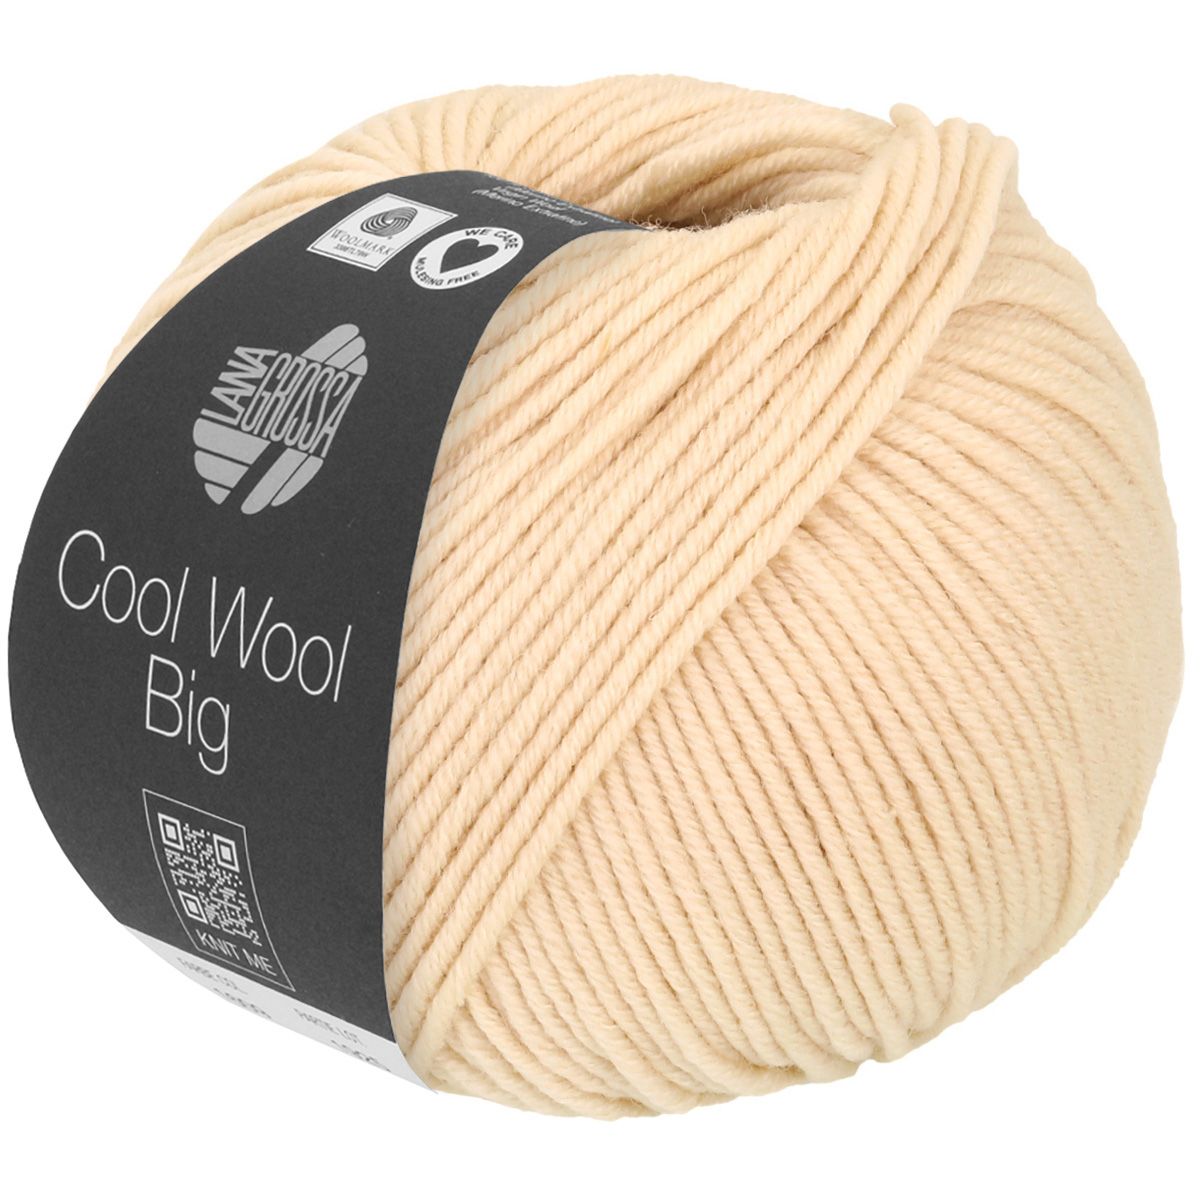 Lana Grossa Cool Wool Big kleur 1016